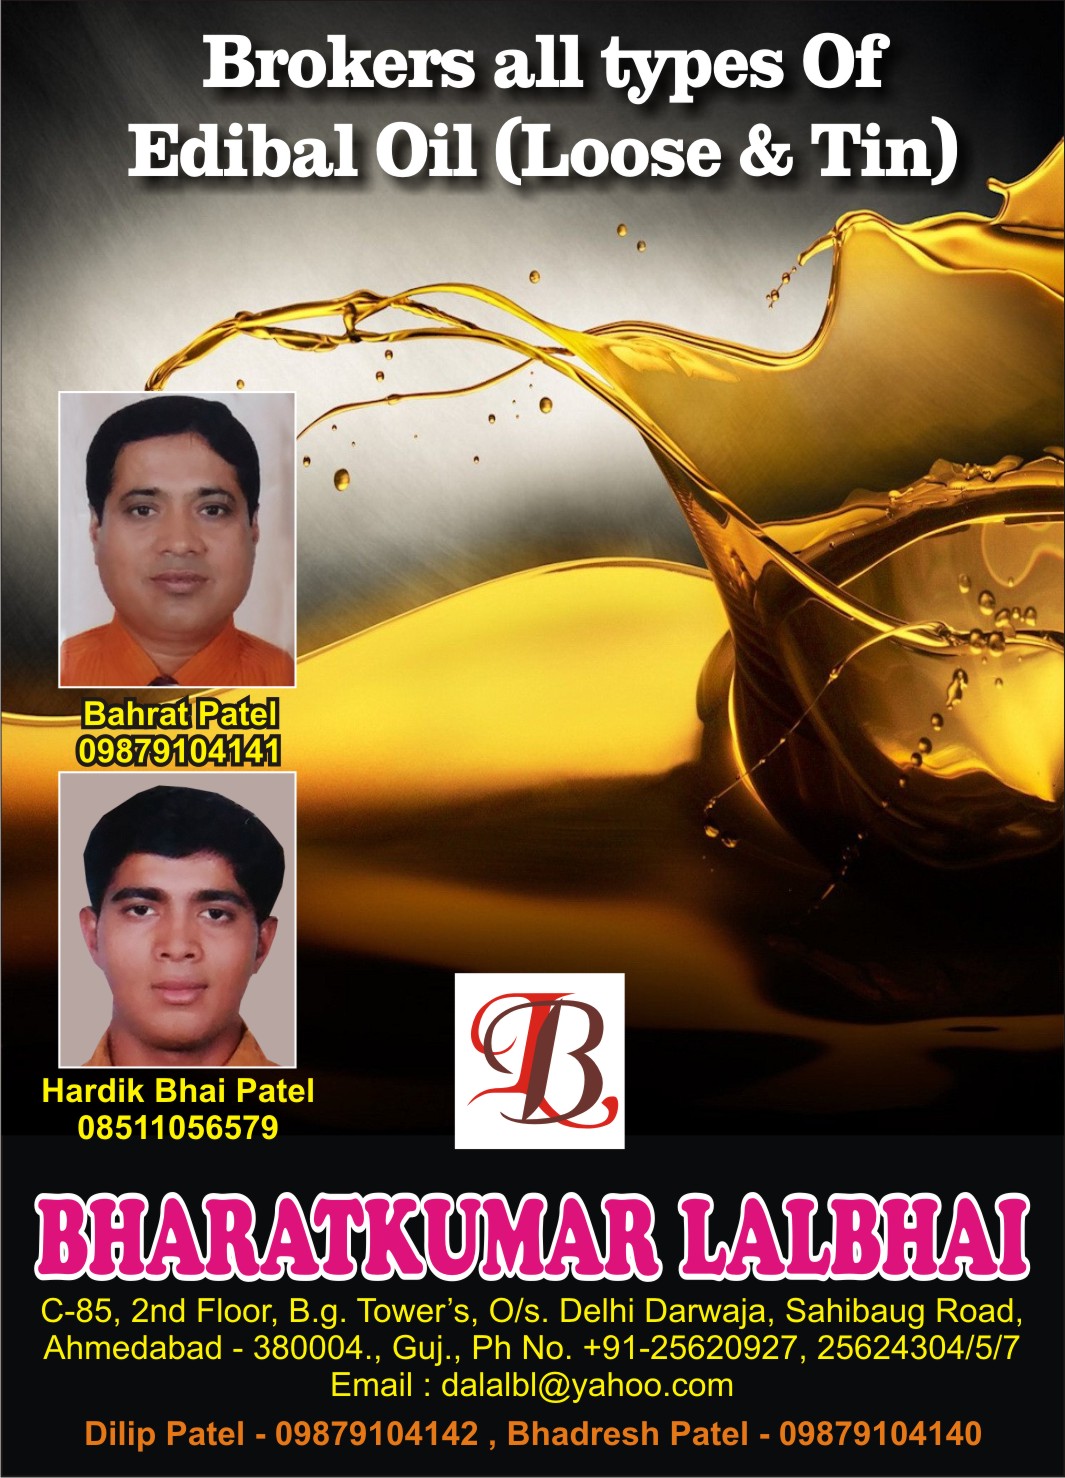 Bharatkumar Lalbhai - Broker Of Edible Oil